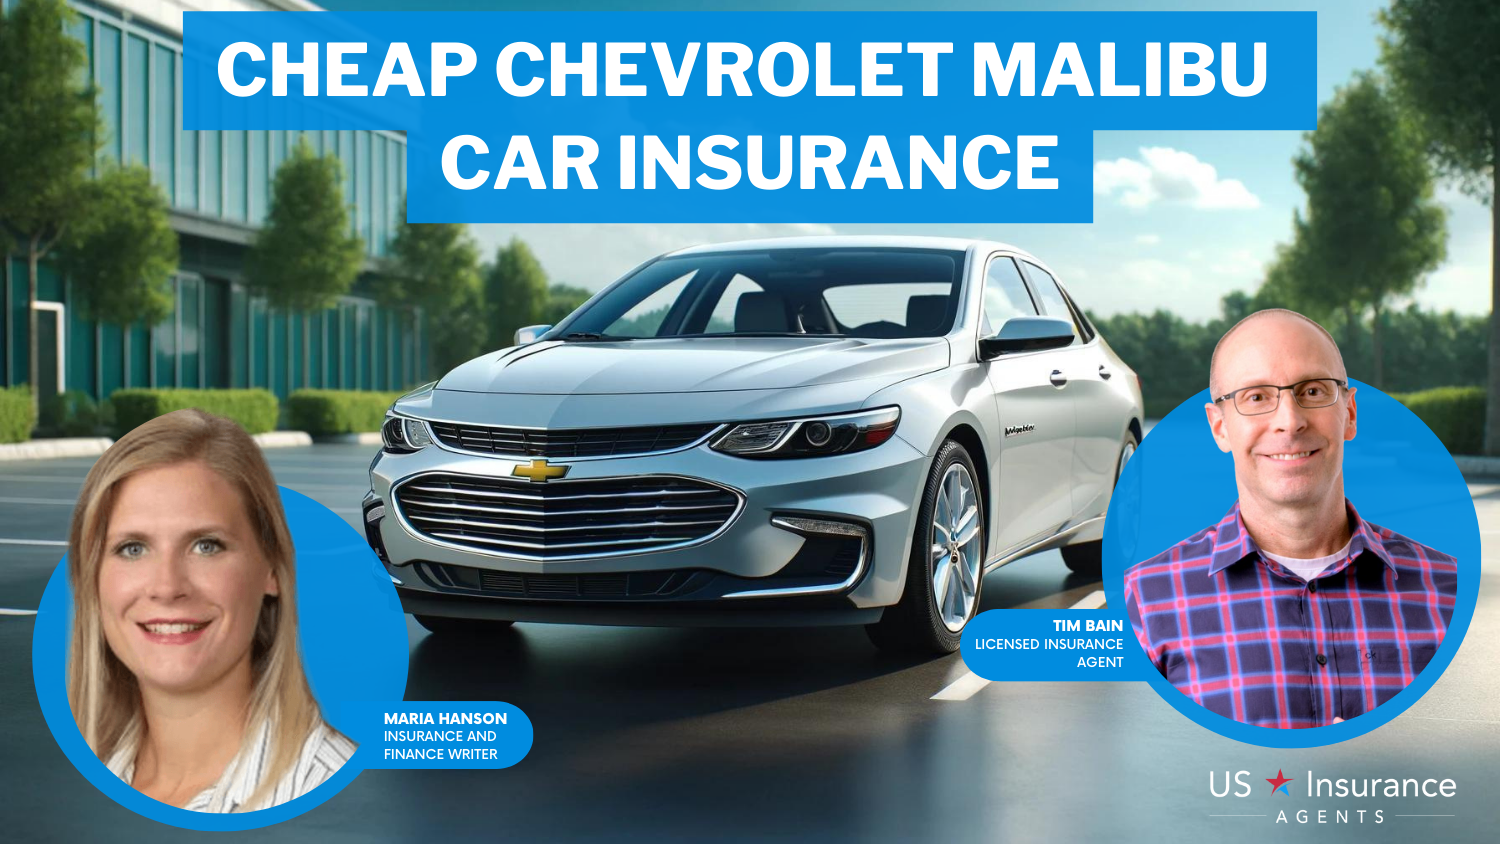 Progressive, Nationwide, and Farmers: Cheap Chevrolet Malibu Car Insurance